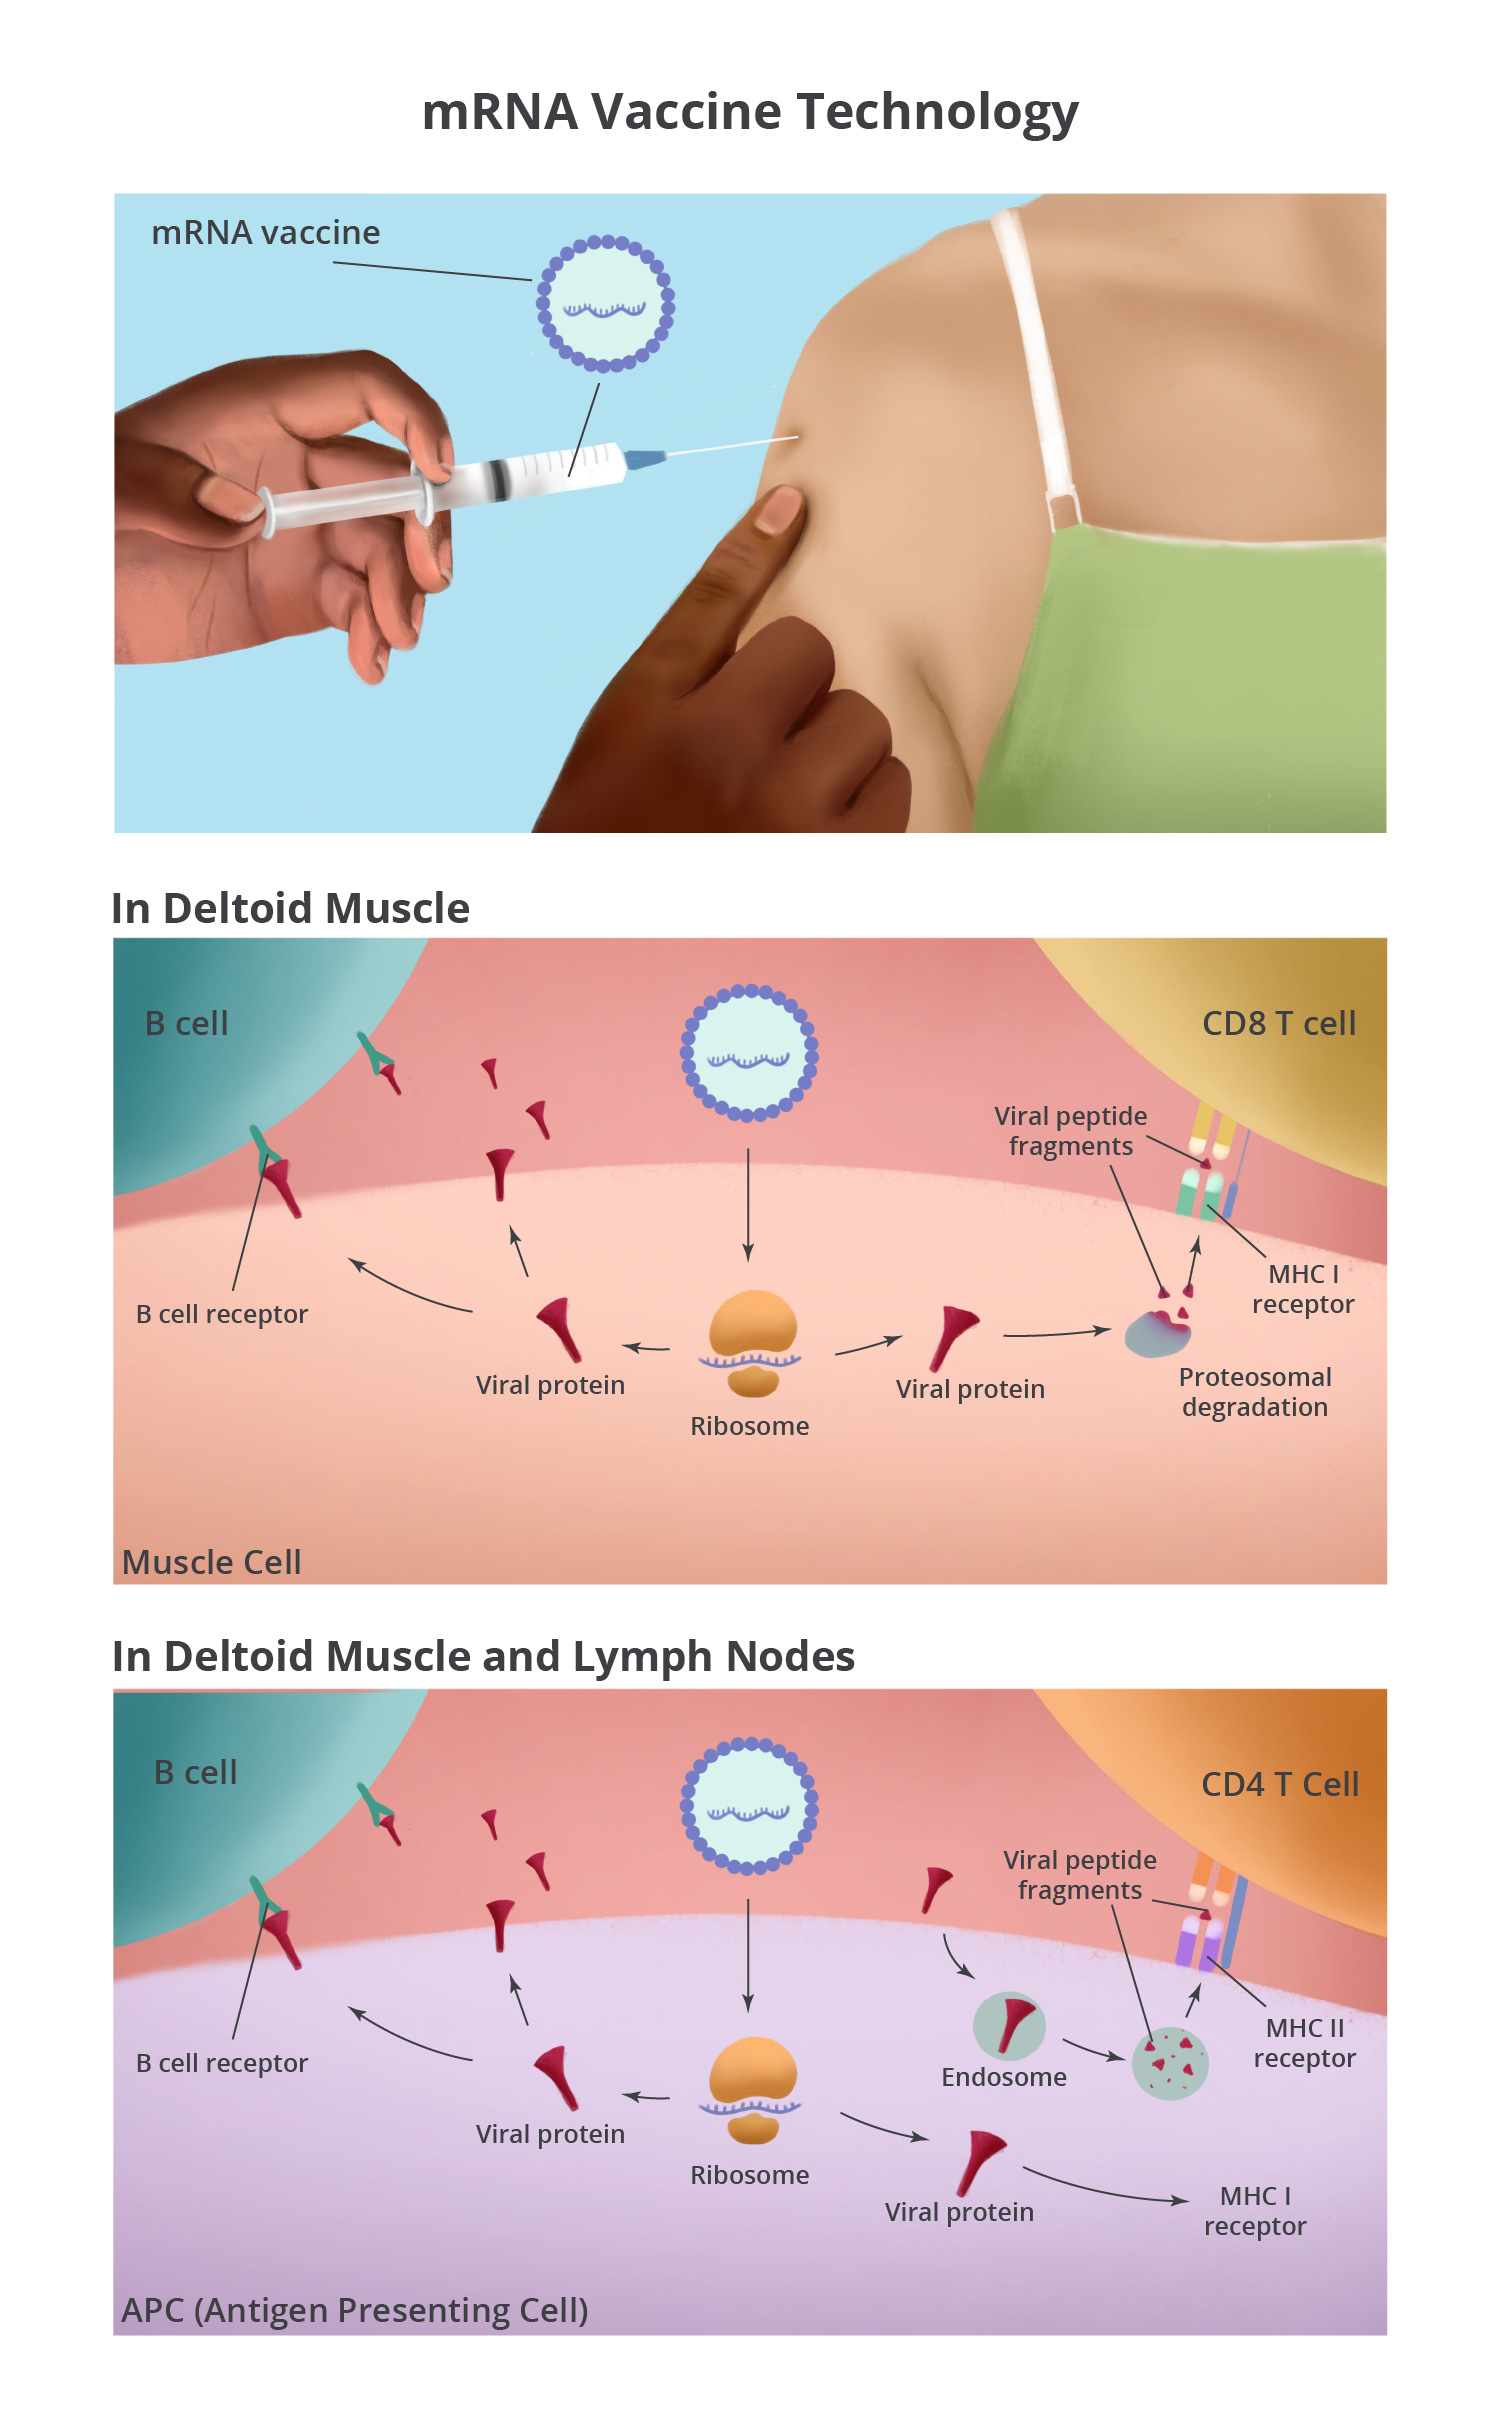 mRNA vaccine technology image   